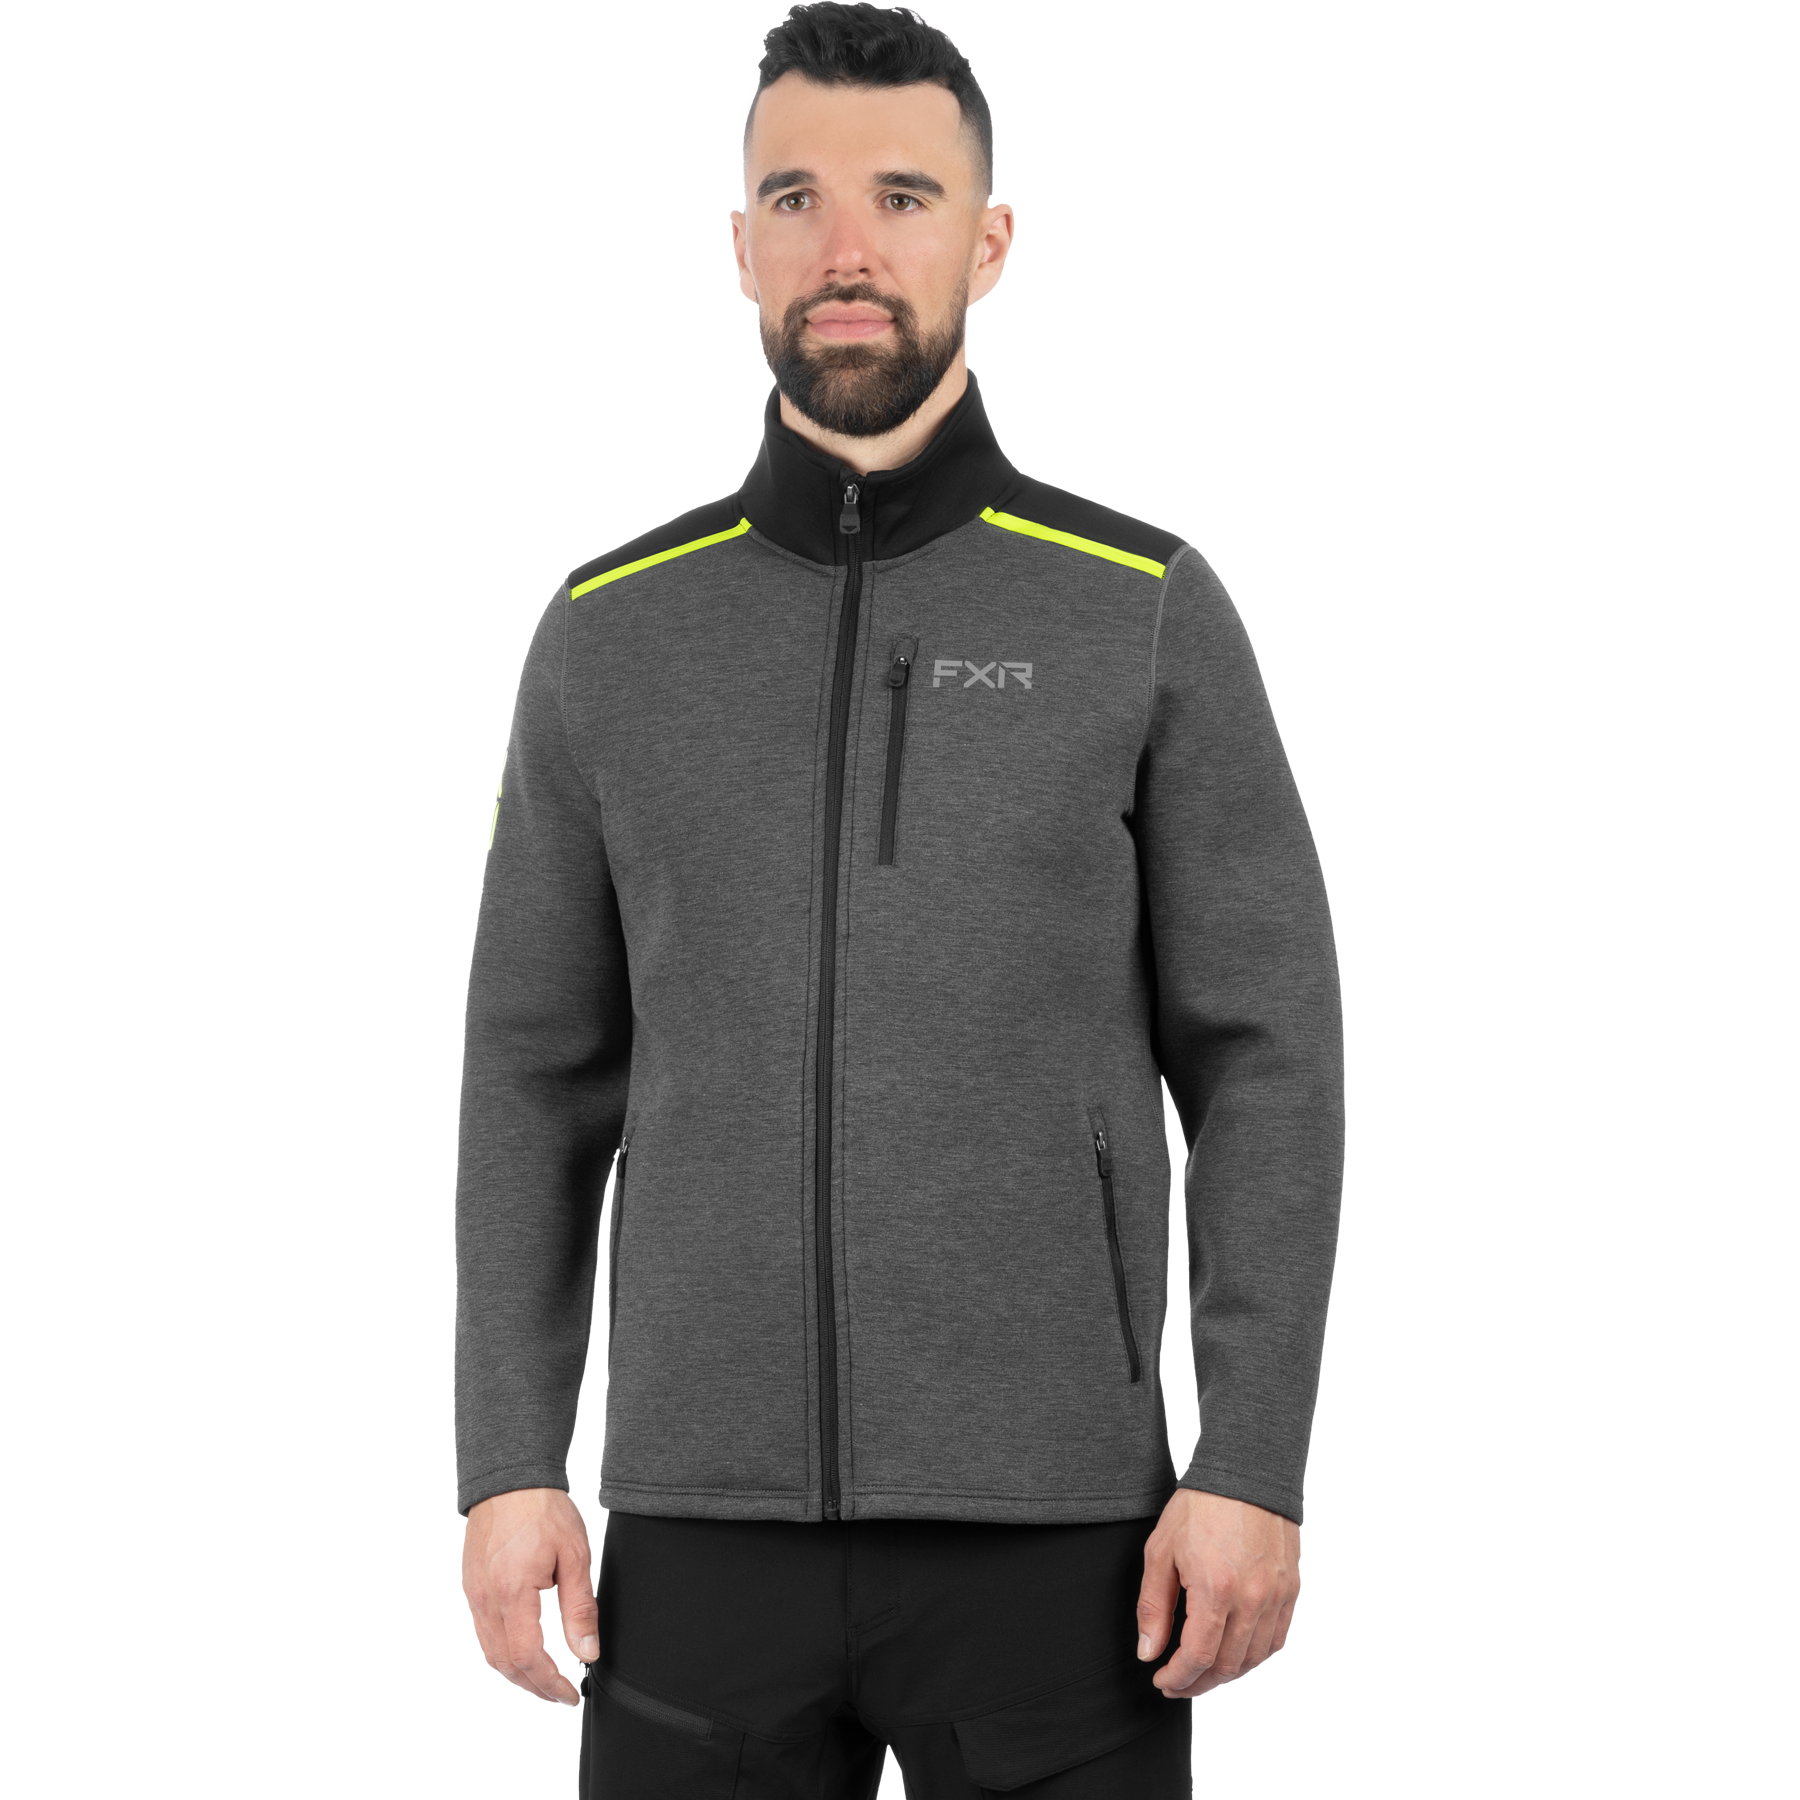 fxr racing jackets  altitude tech zip up jackets - casual